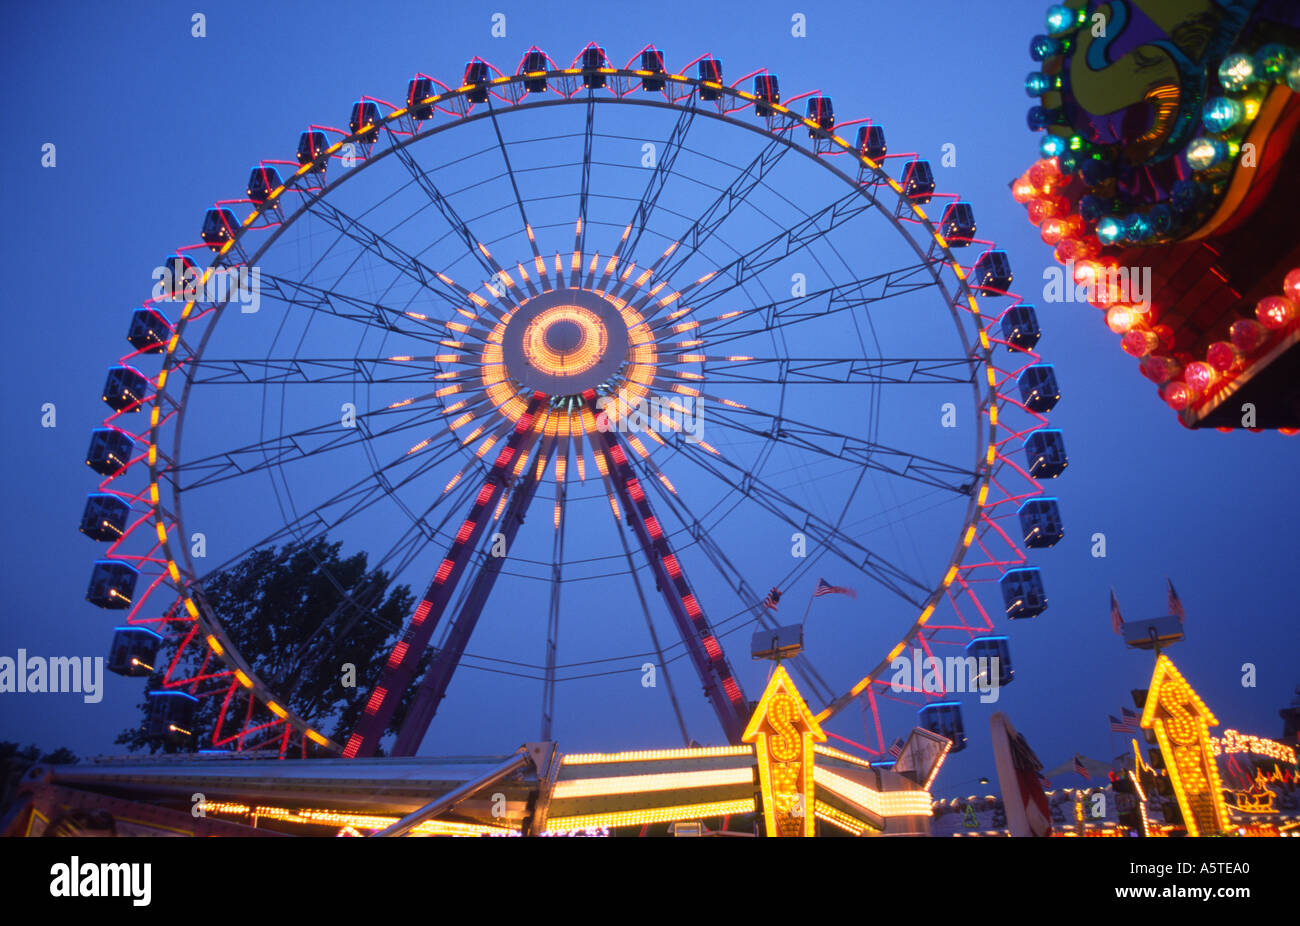 Ferries Wheel on a Fairground at Night Stock Photo